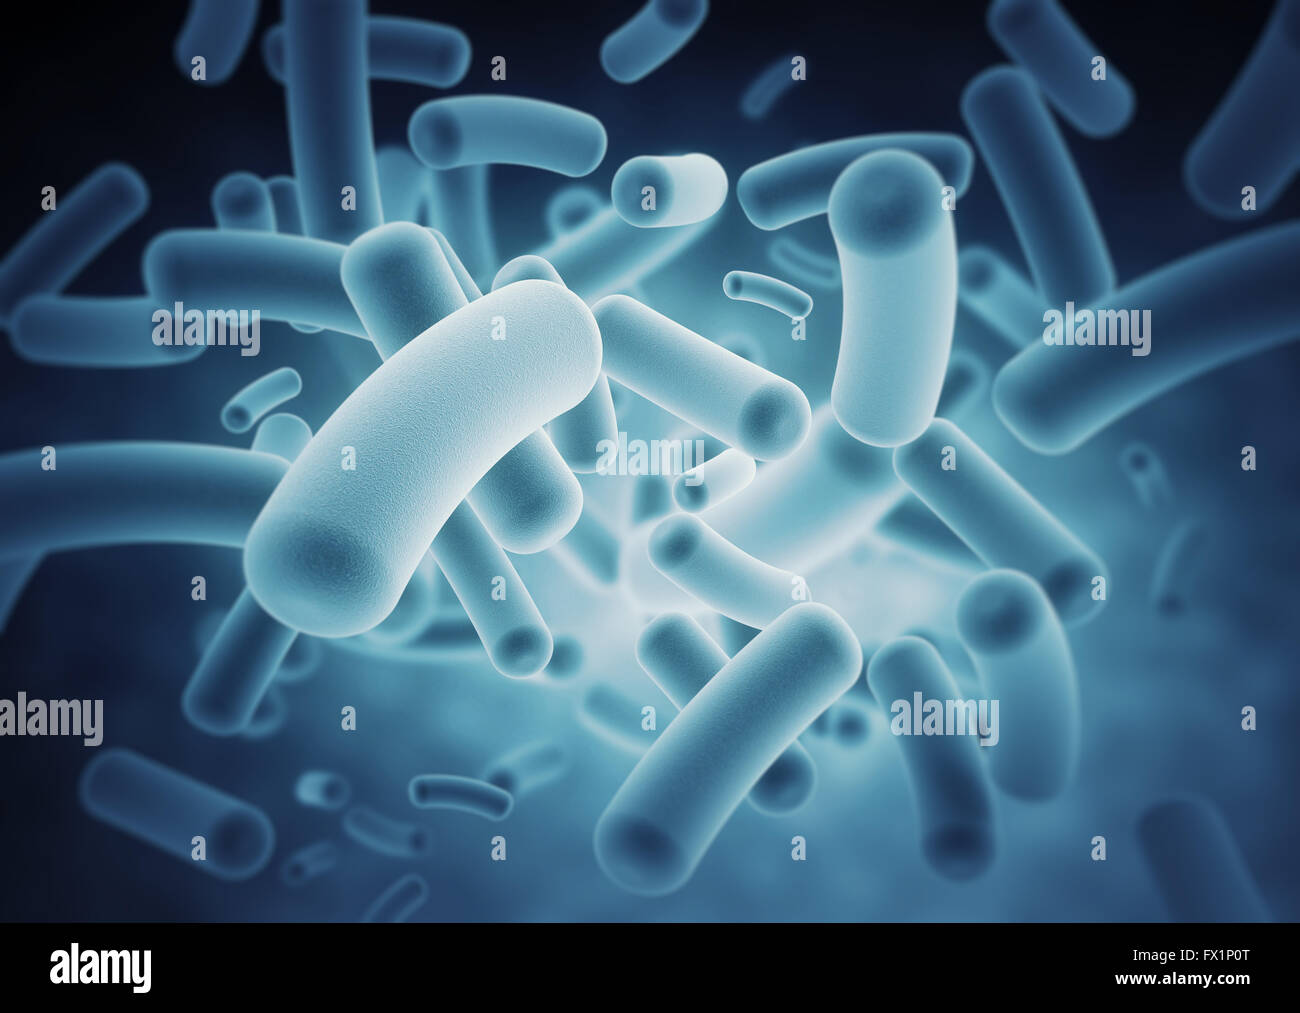 Medical illustration of virus cells close up Stock Photo